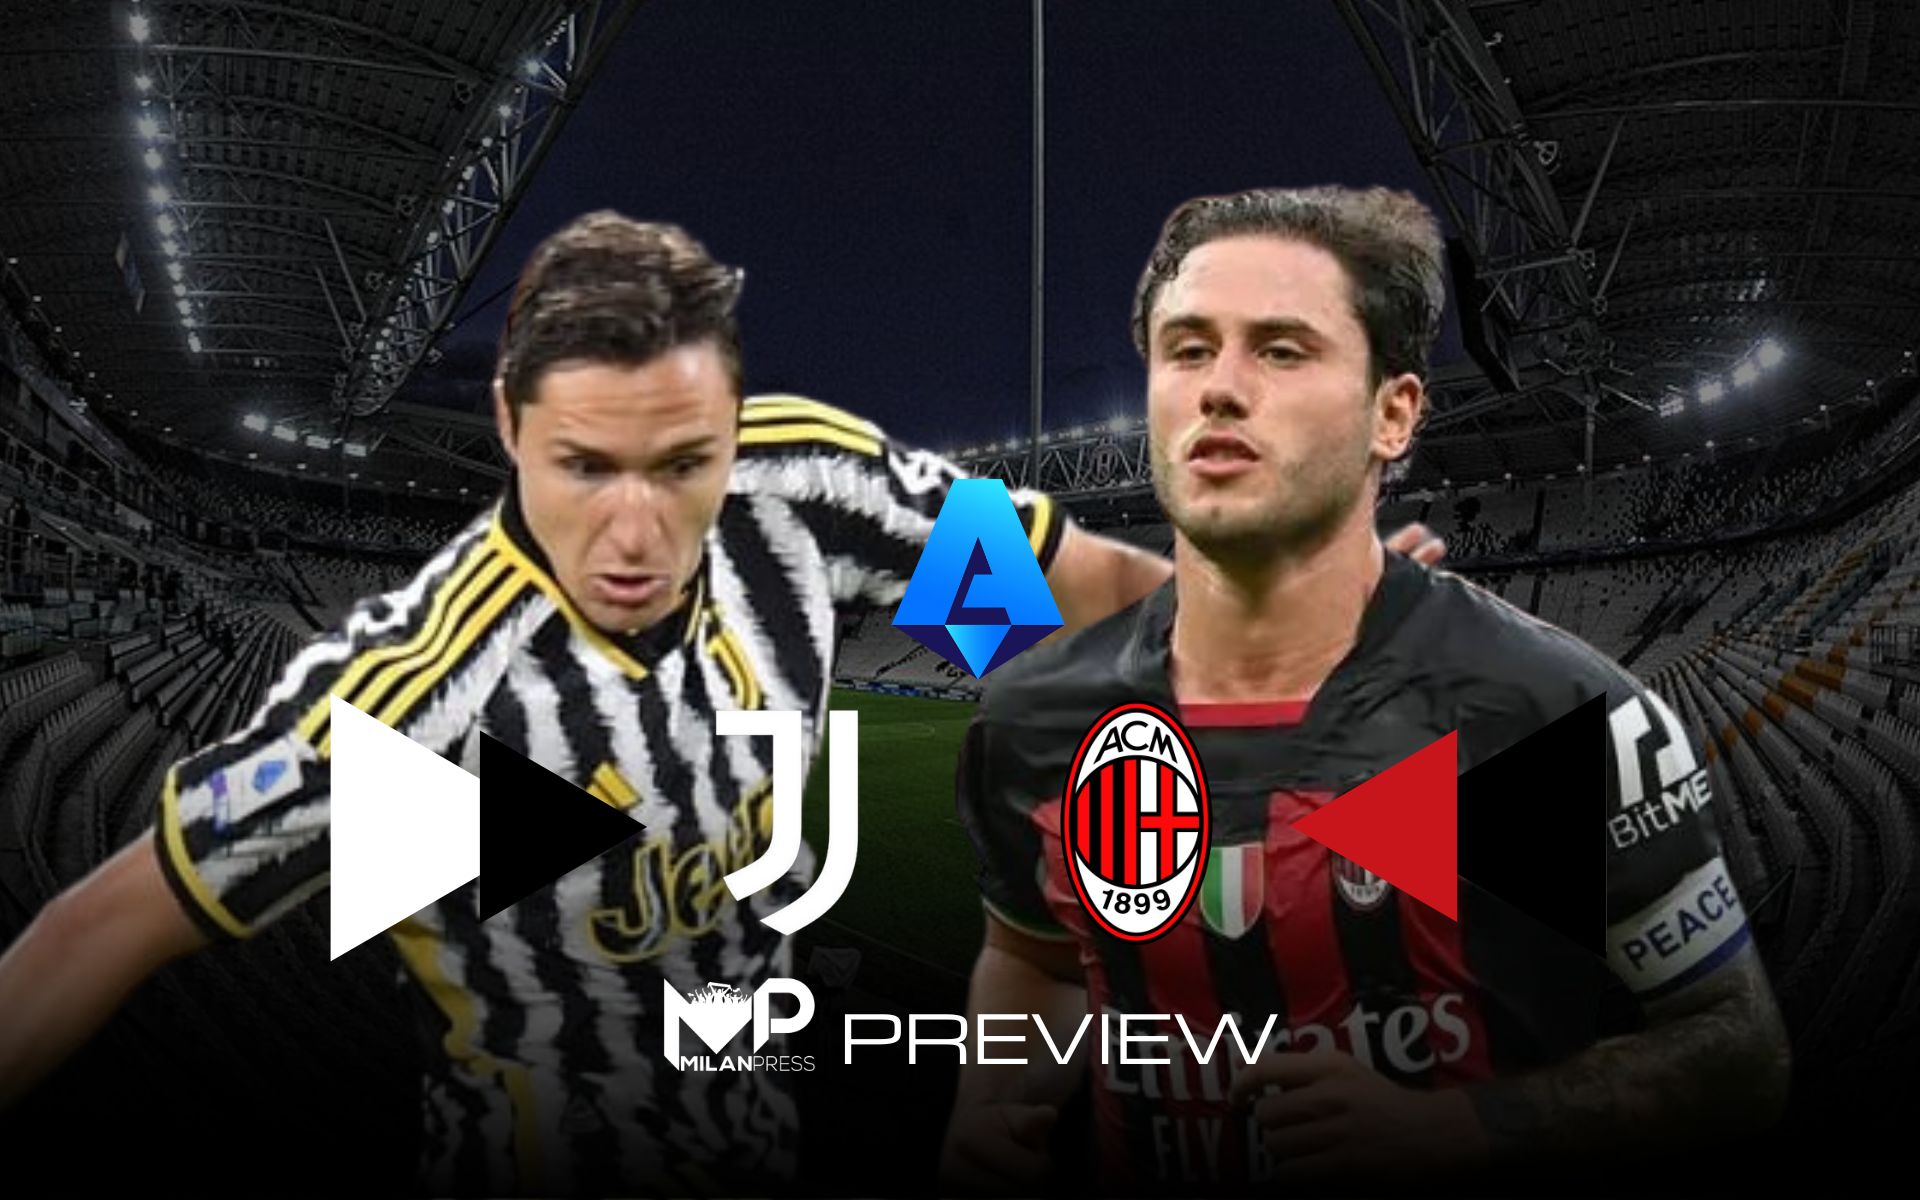 Juventus-Milan Preview - MilanPress, robe dell'altro diavolo